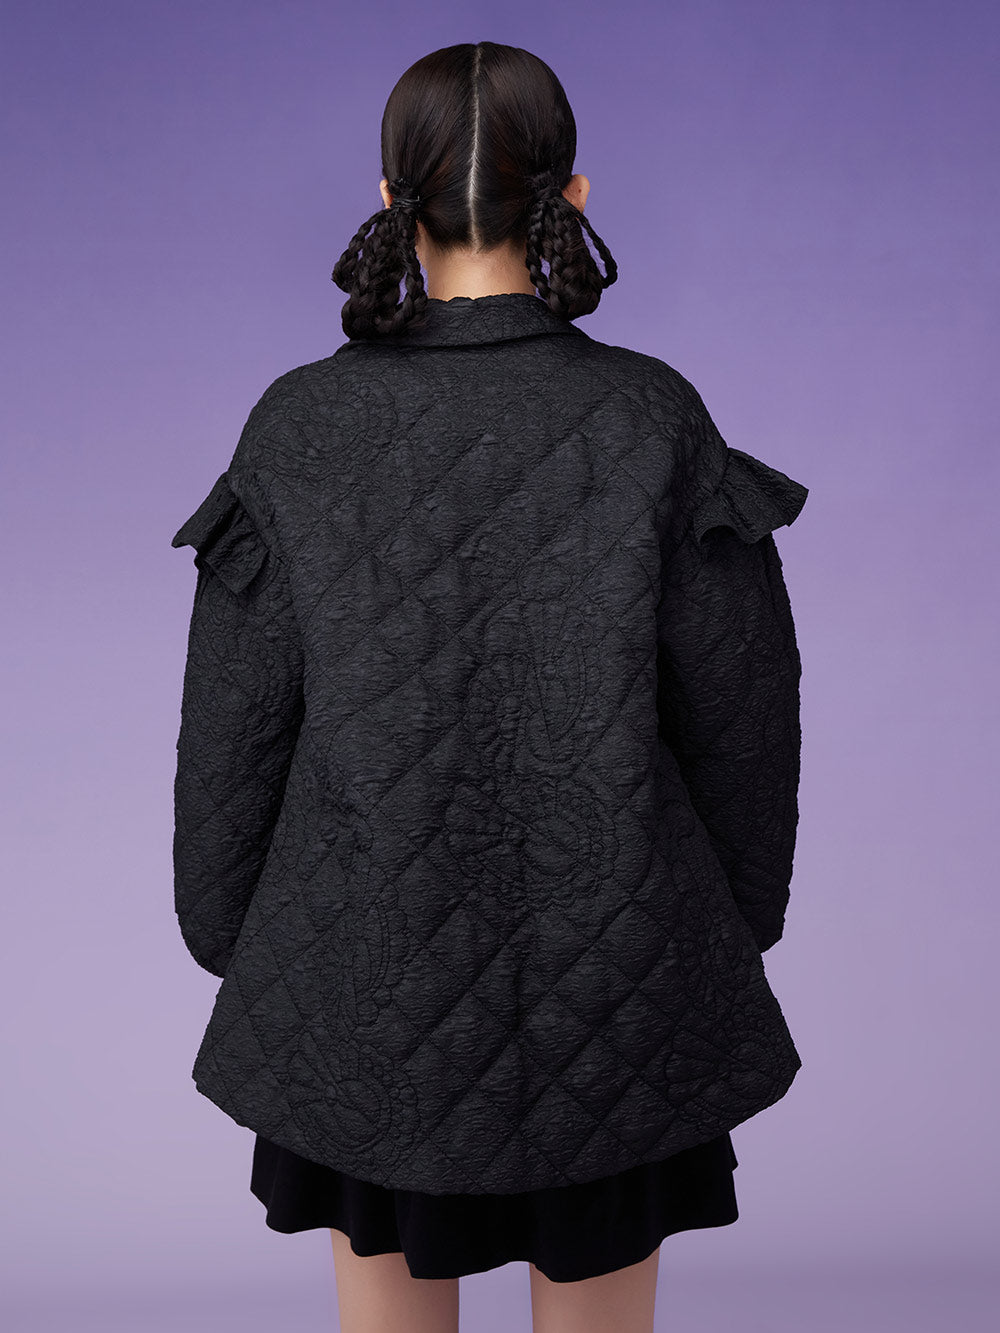 MUKZIN Black Three-dimensional Jacquard A-line mid-length Jacket